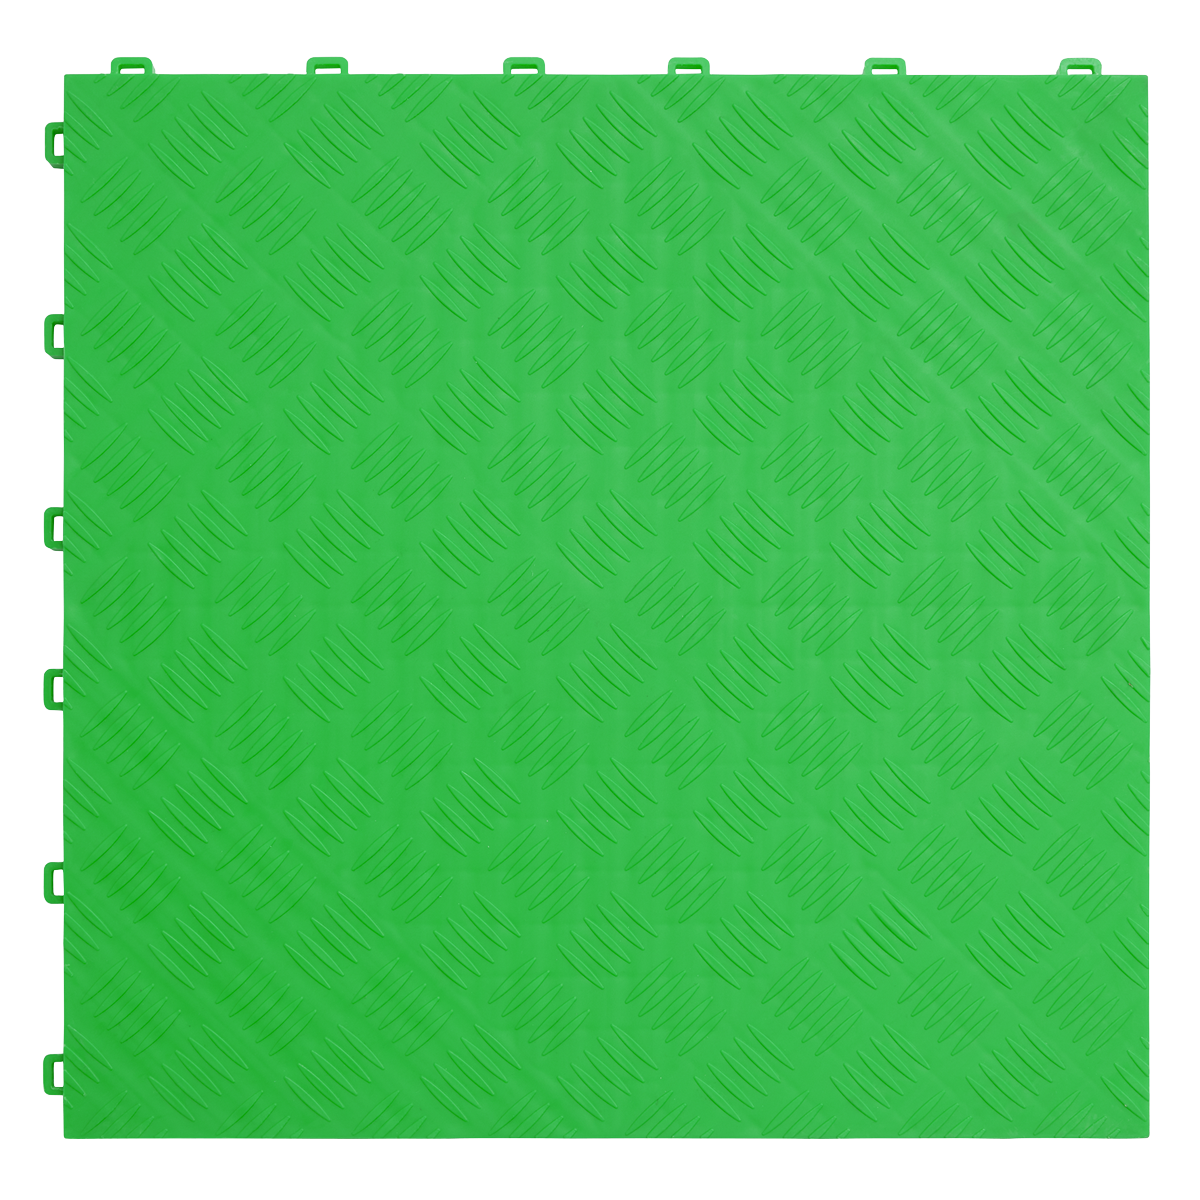 Sealey FT3GR Polypropylene Floor Tile - Green Treadplate 400 x 400mm - Pack of 9